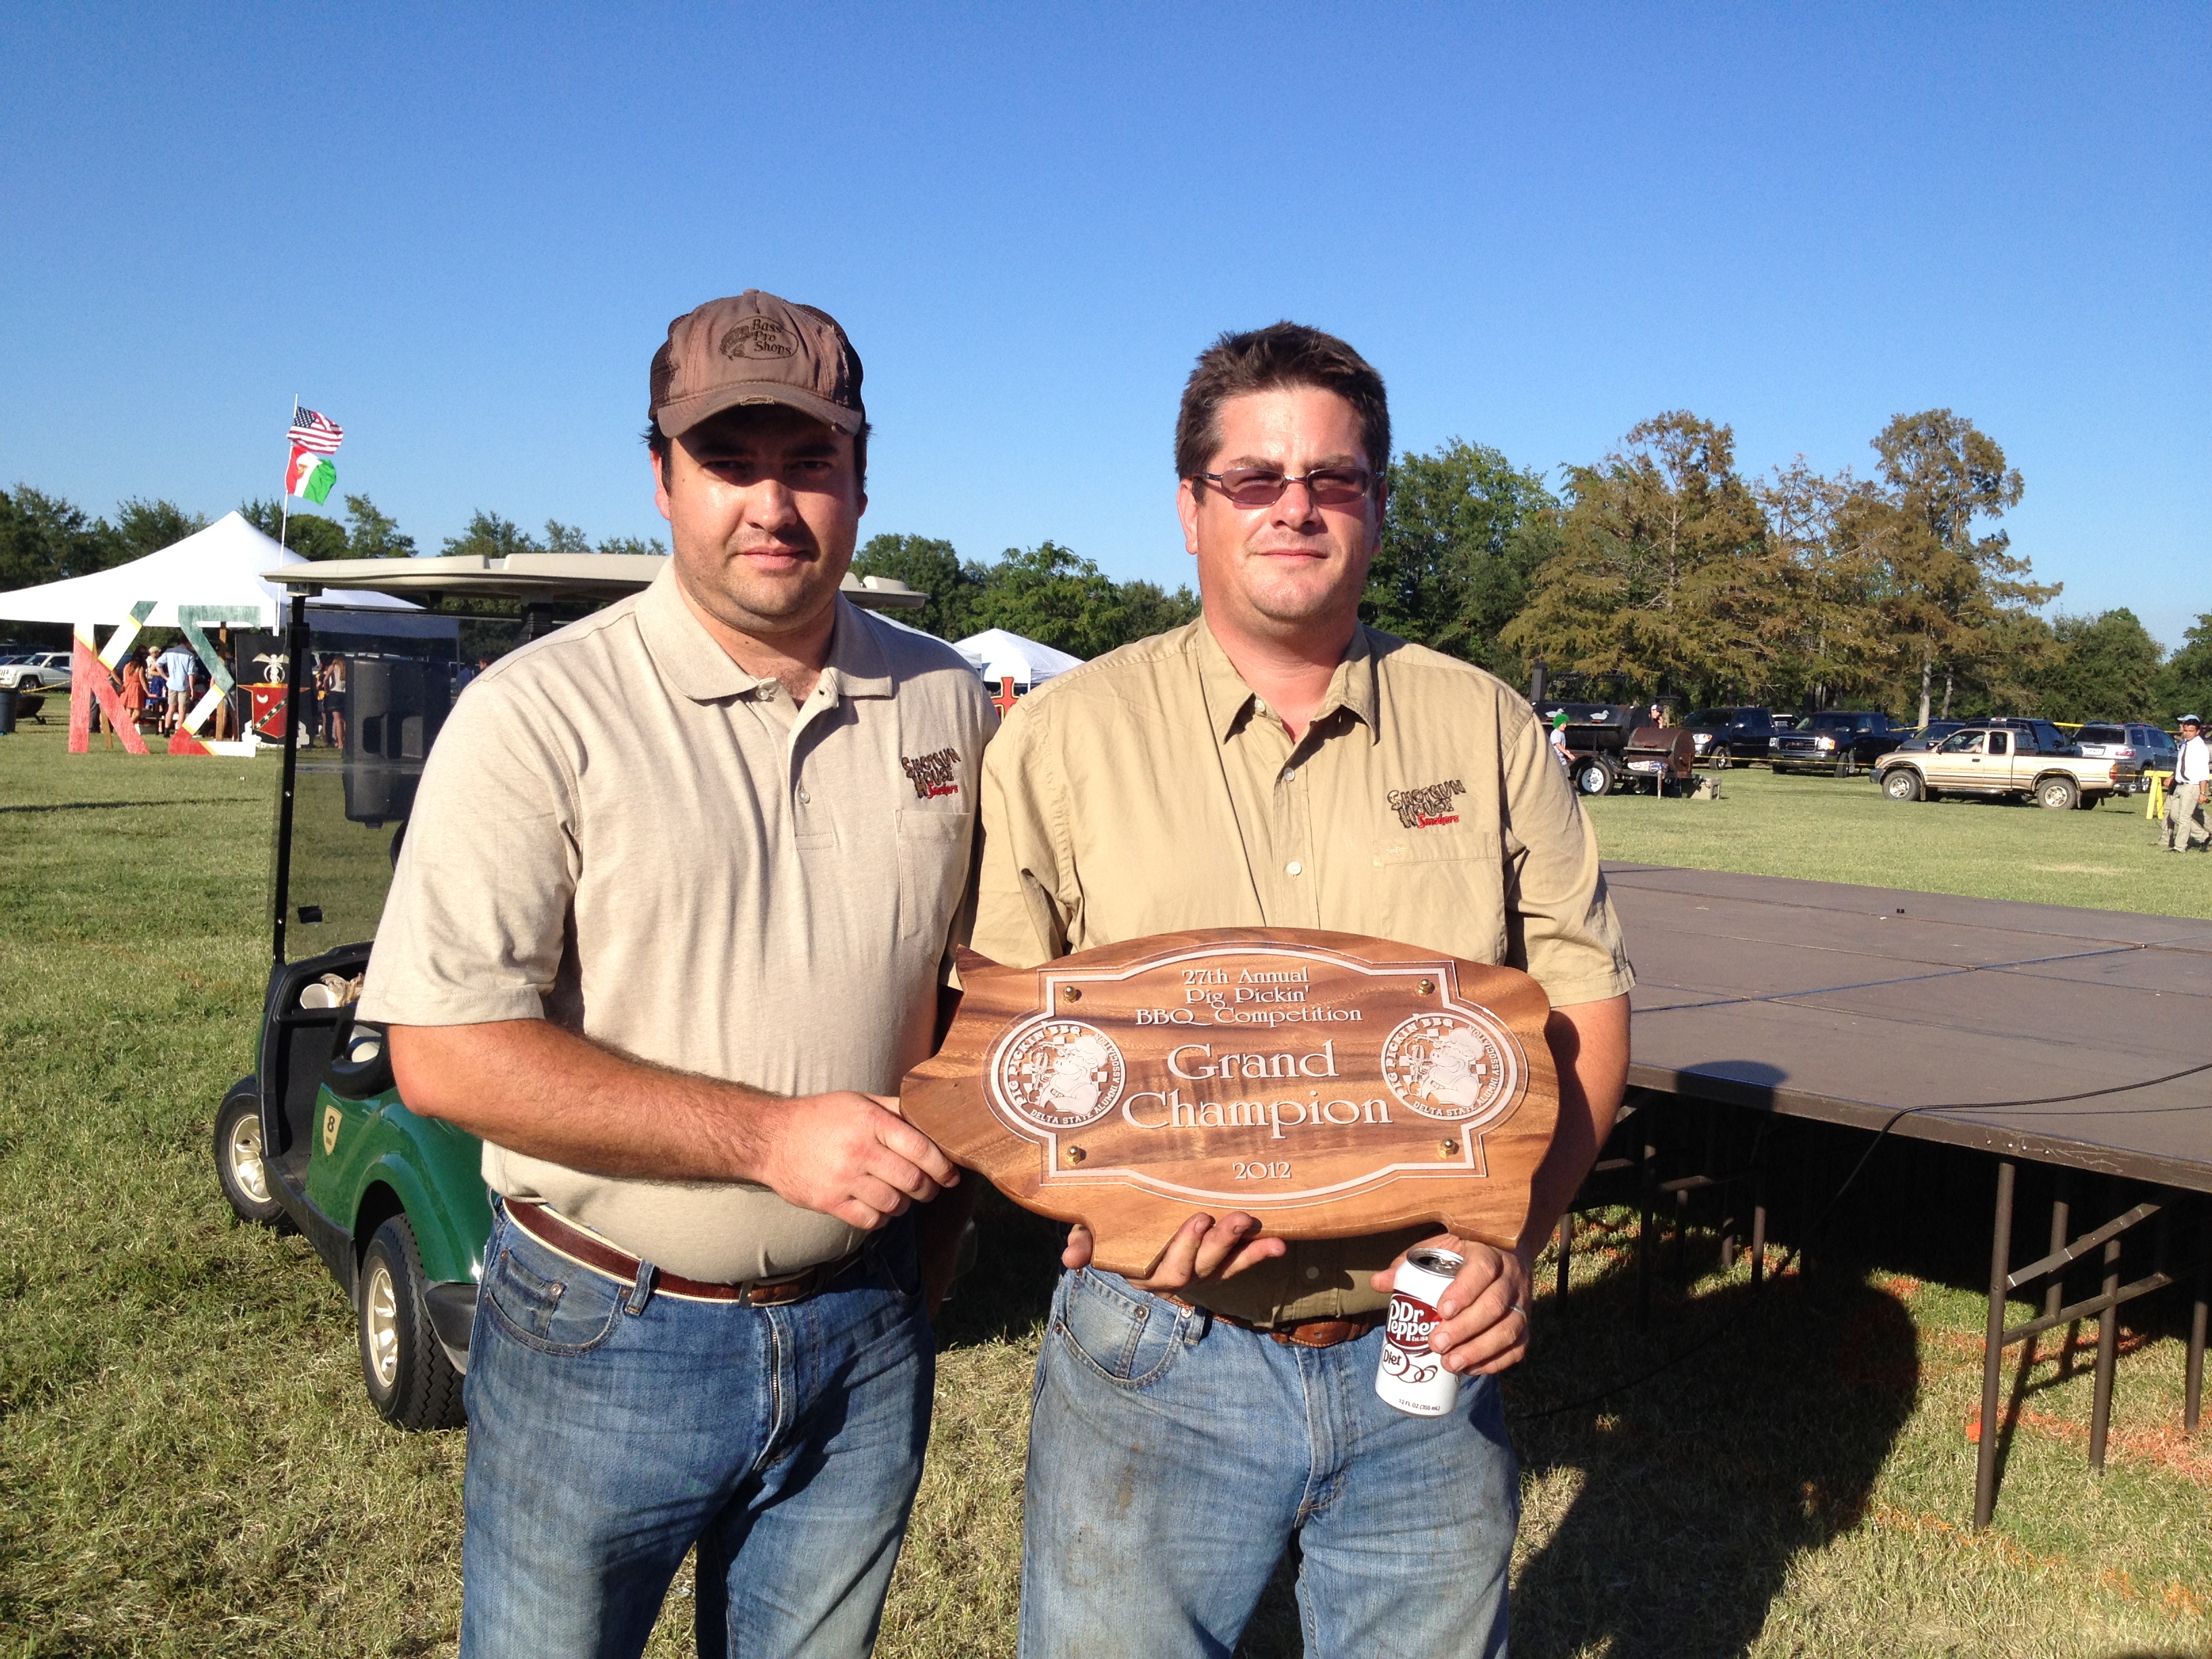 2012 Pig Pickin’ Grand Champions:  From left, Kelvin Sumner of Merigold, and Tony Jones of Cleveland, with the plaque awarded to the 2012 Pig Pickin’ Grand Champion - Shotgun House Smokers.